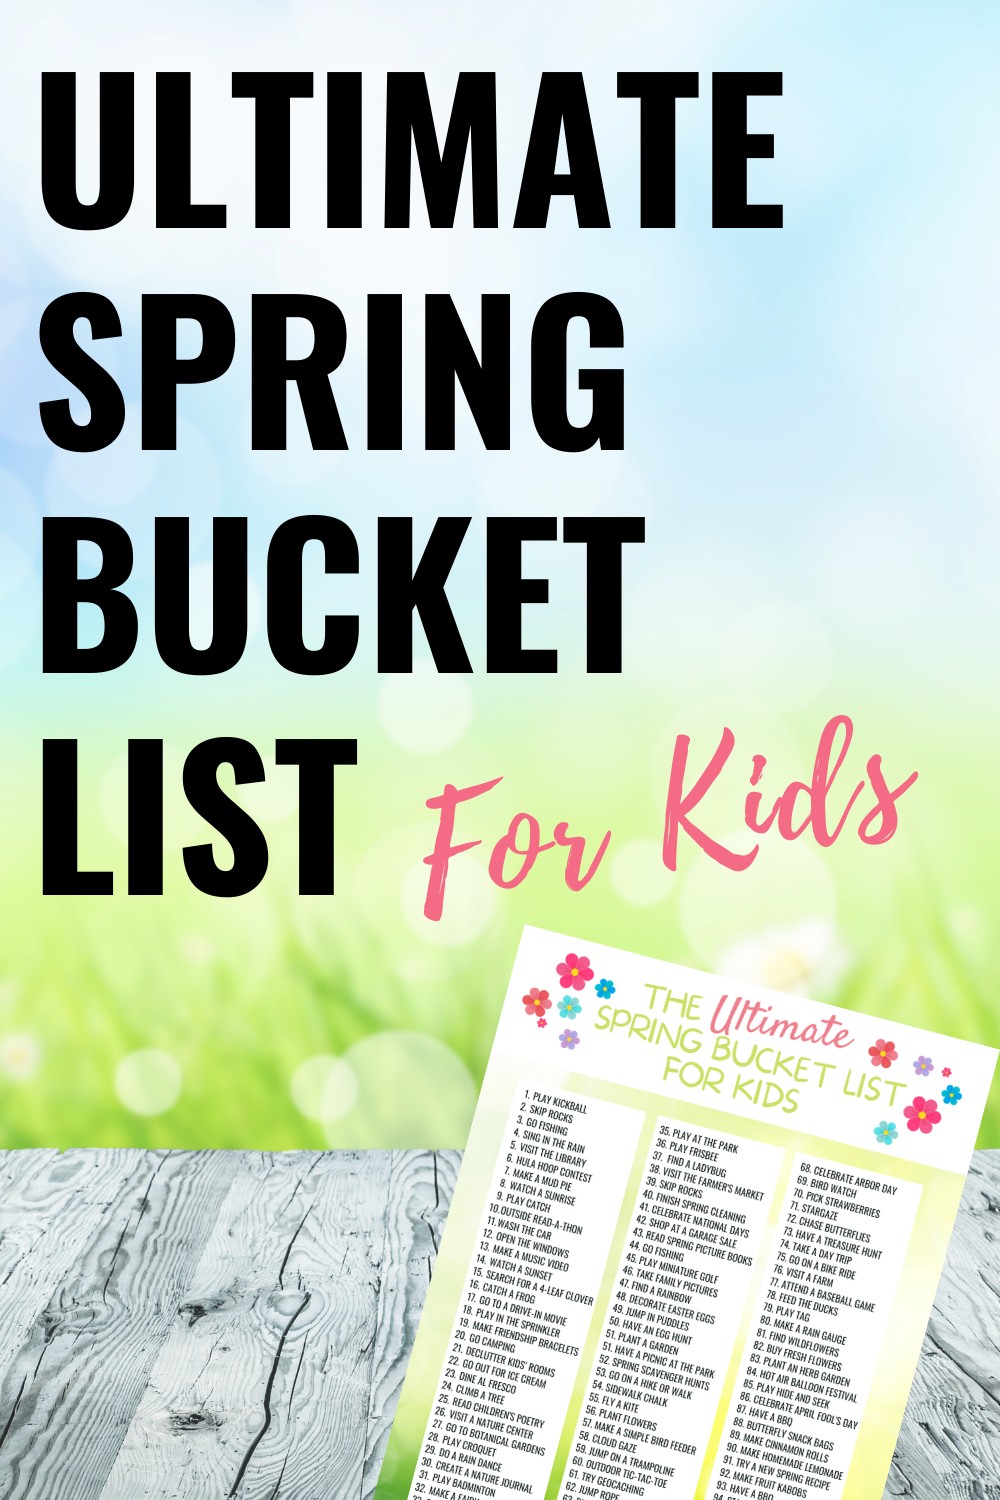 101 Spring Bucket List Ideas Your Kids Will Love